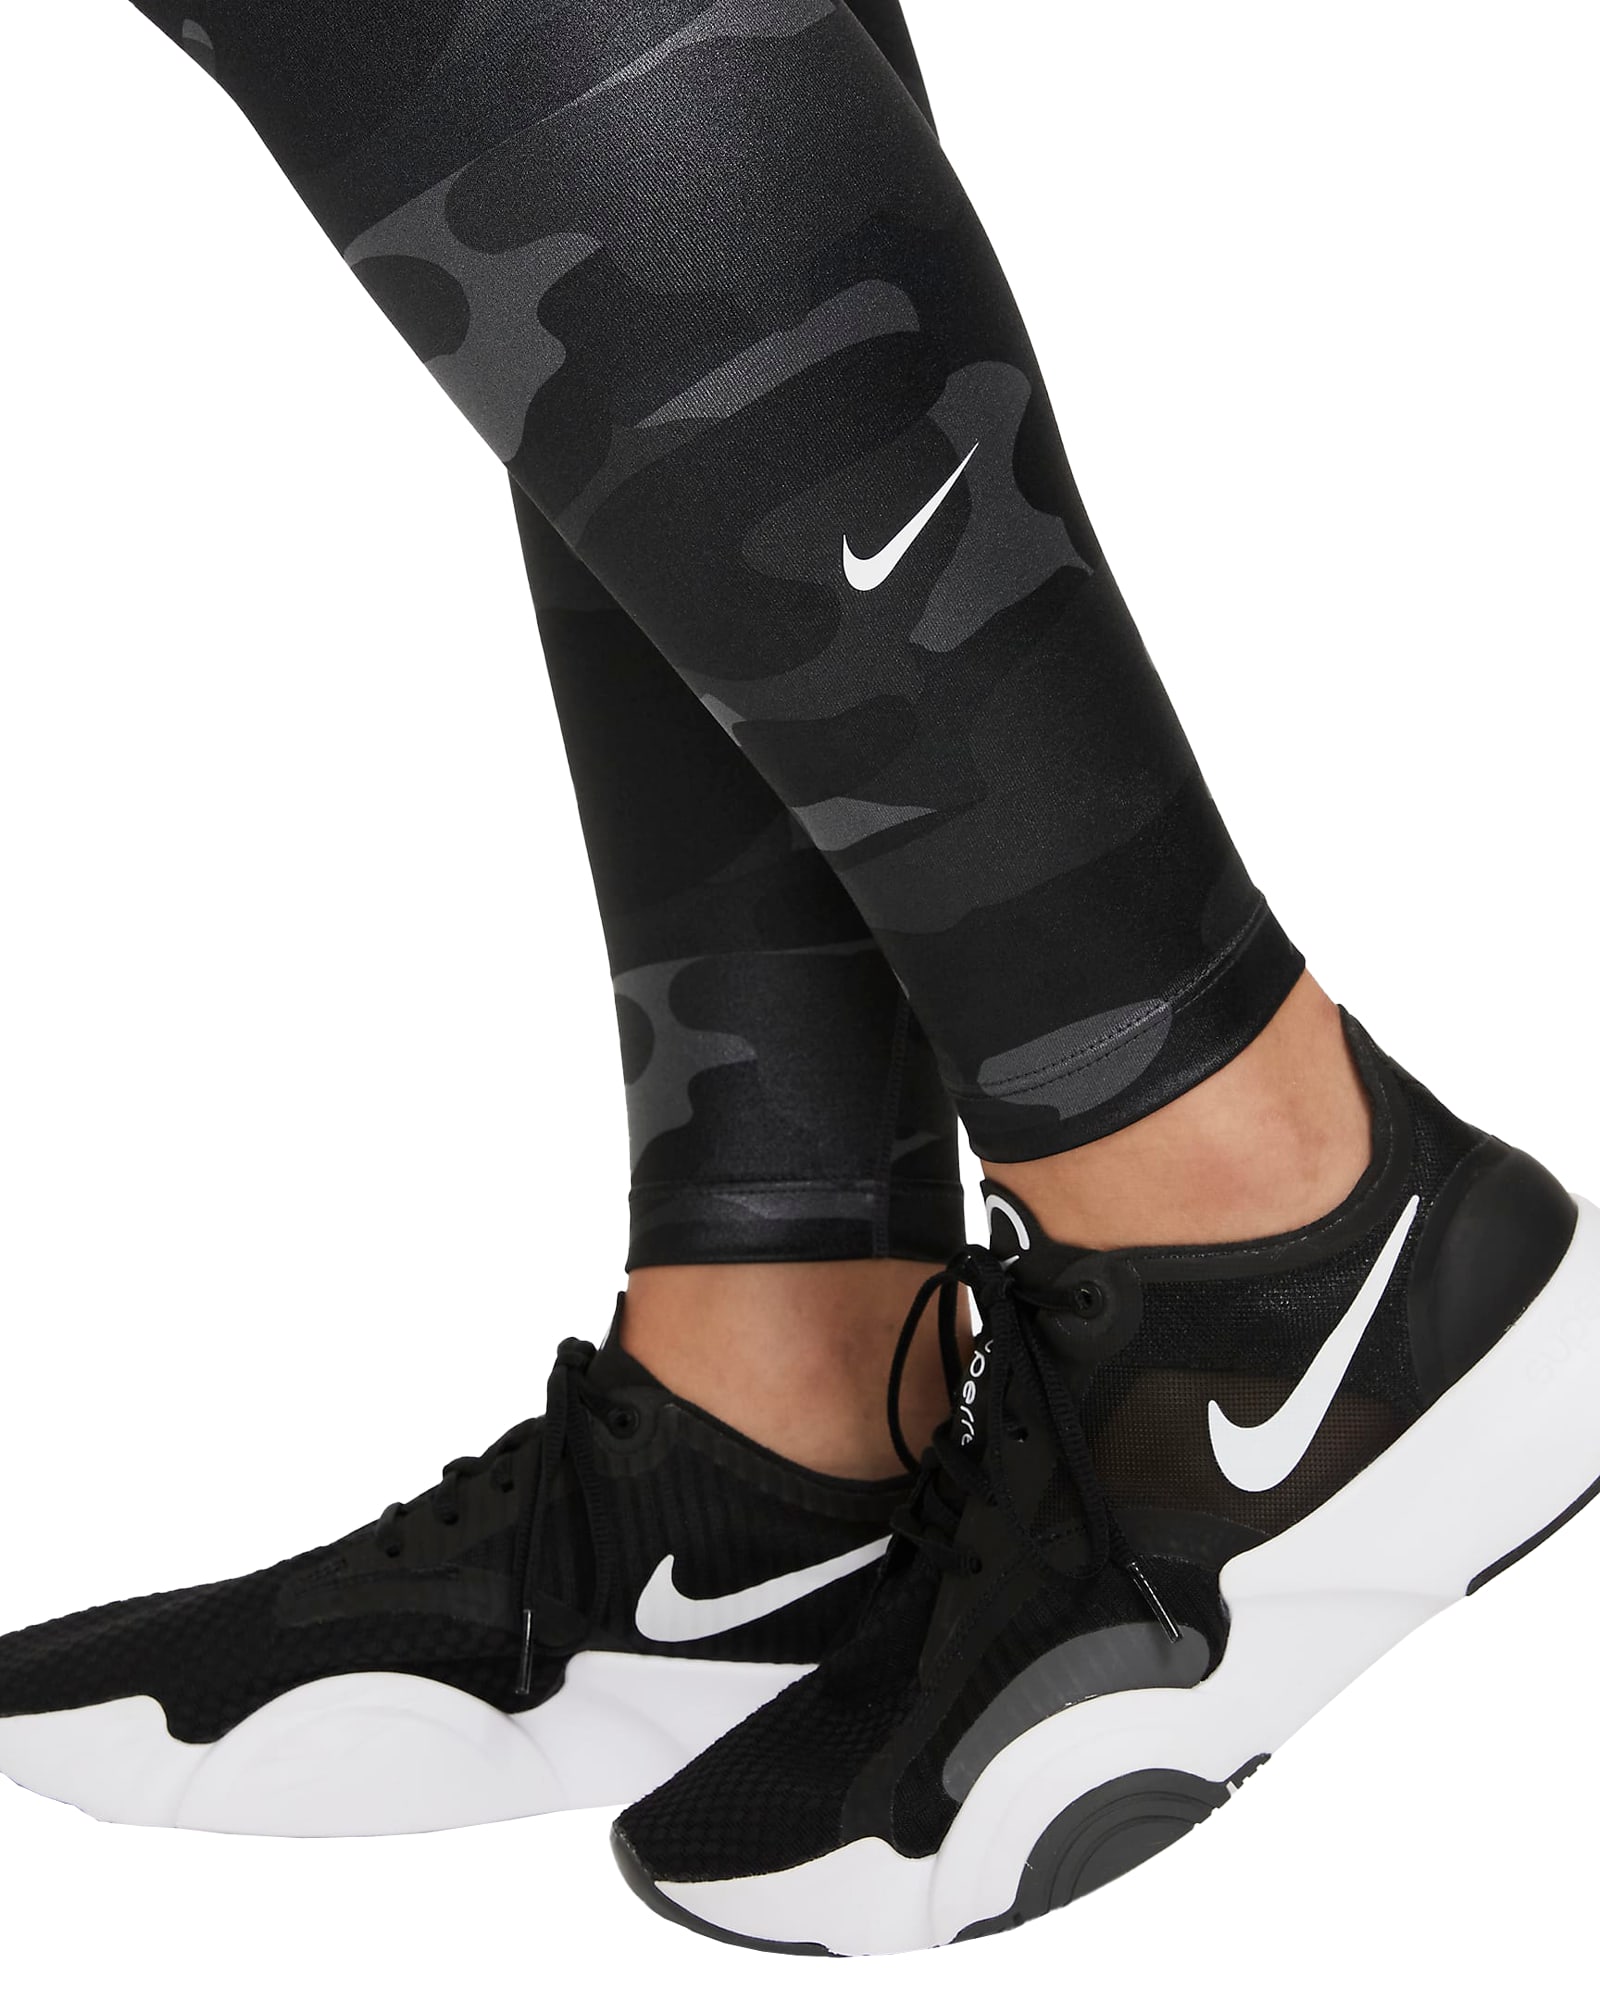 NWT Nike Dri-FIT Midrise Camo Leggings Plus Size 1X